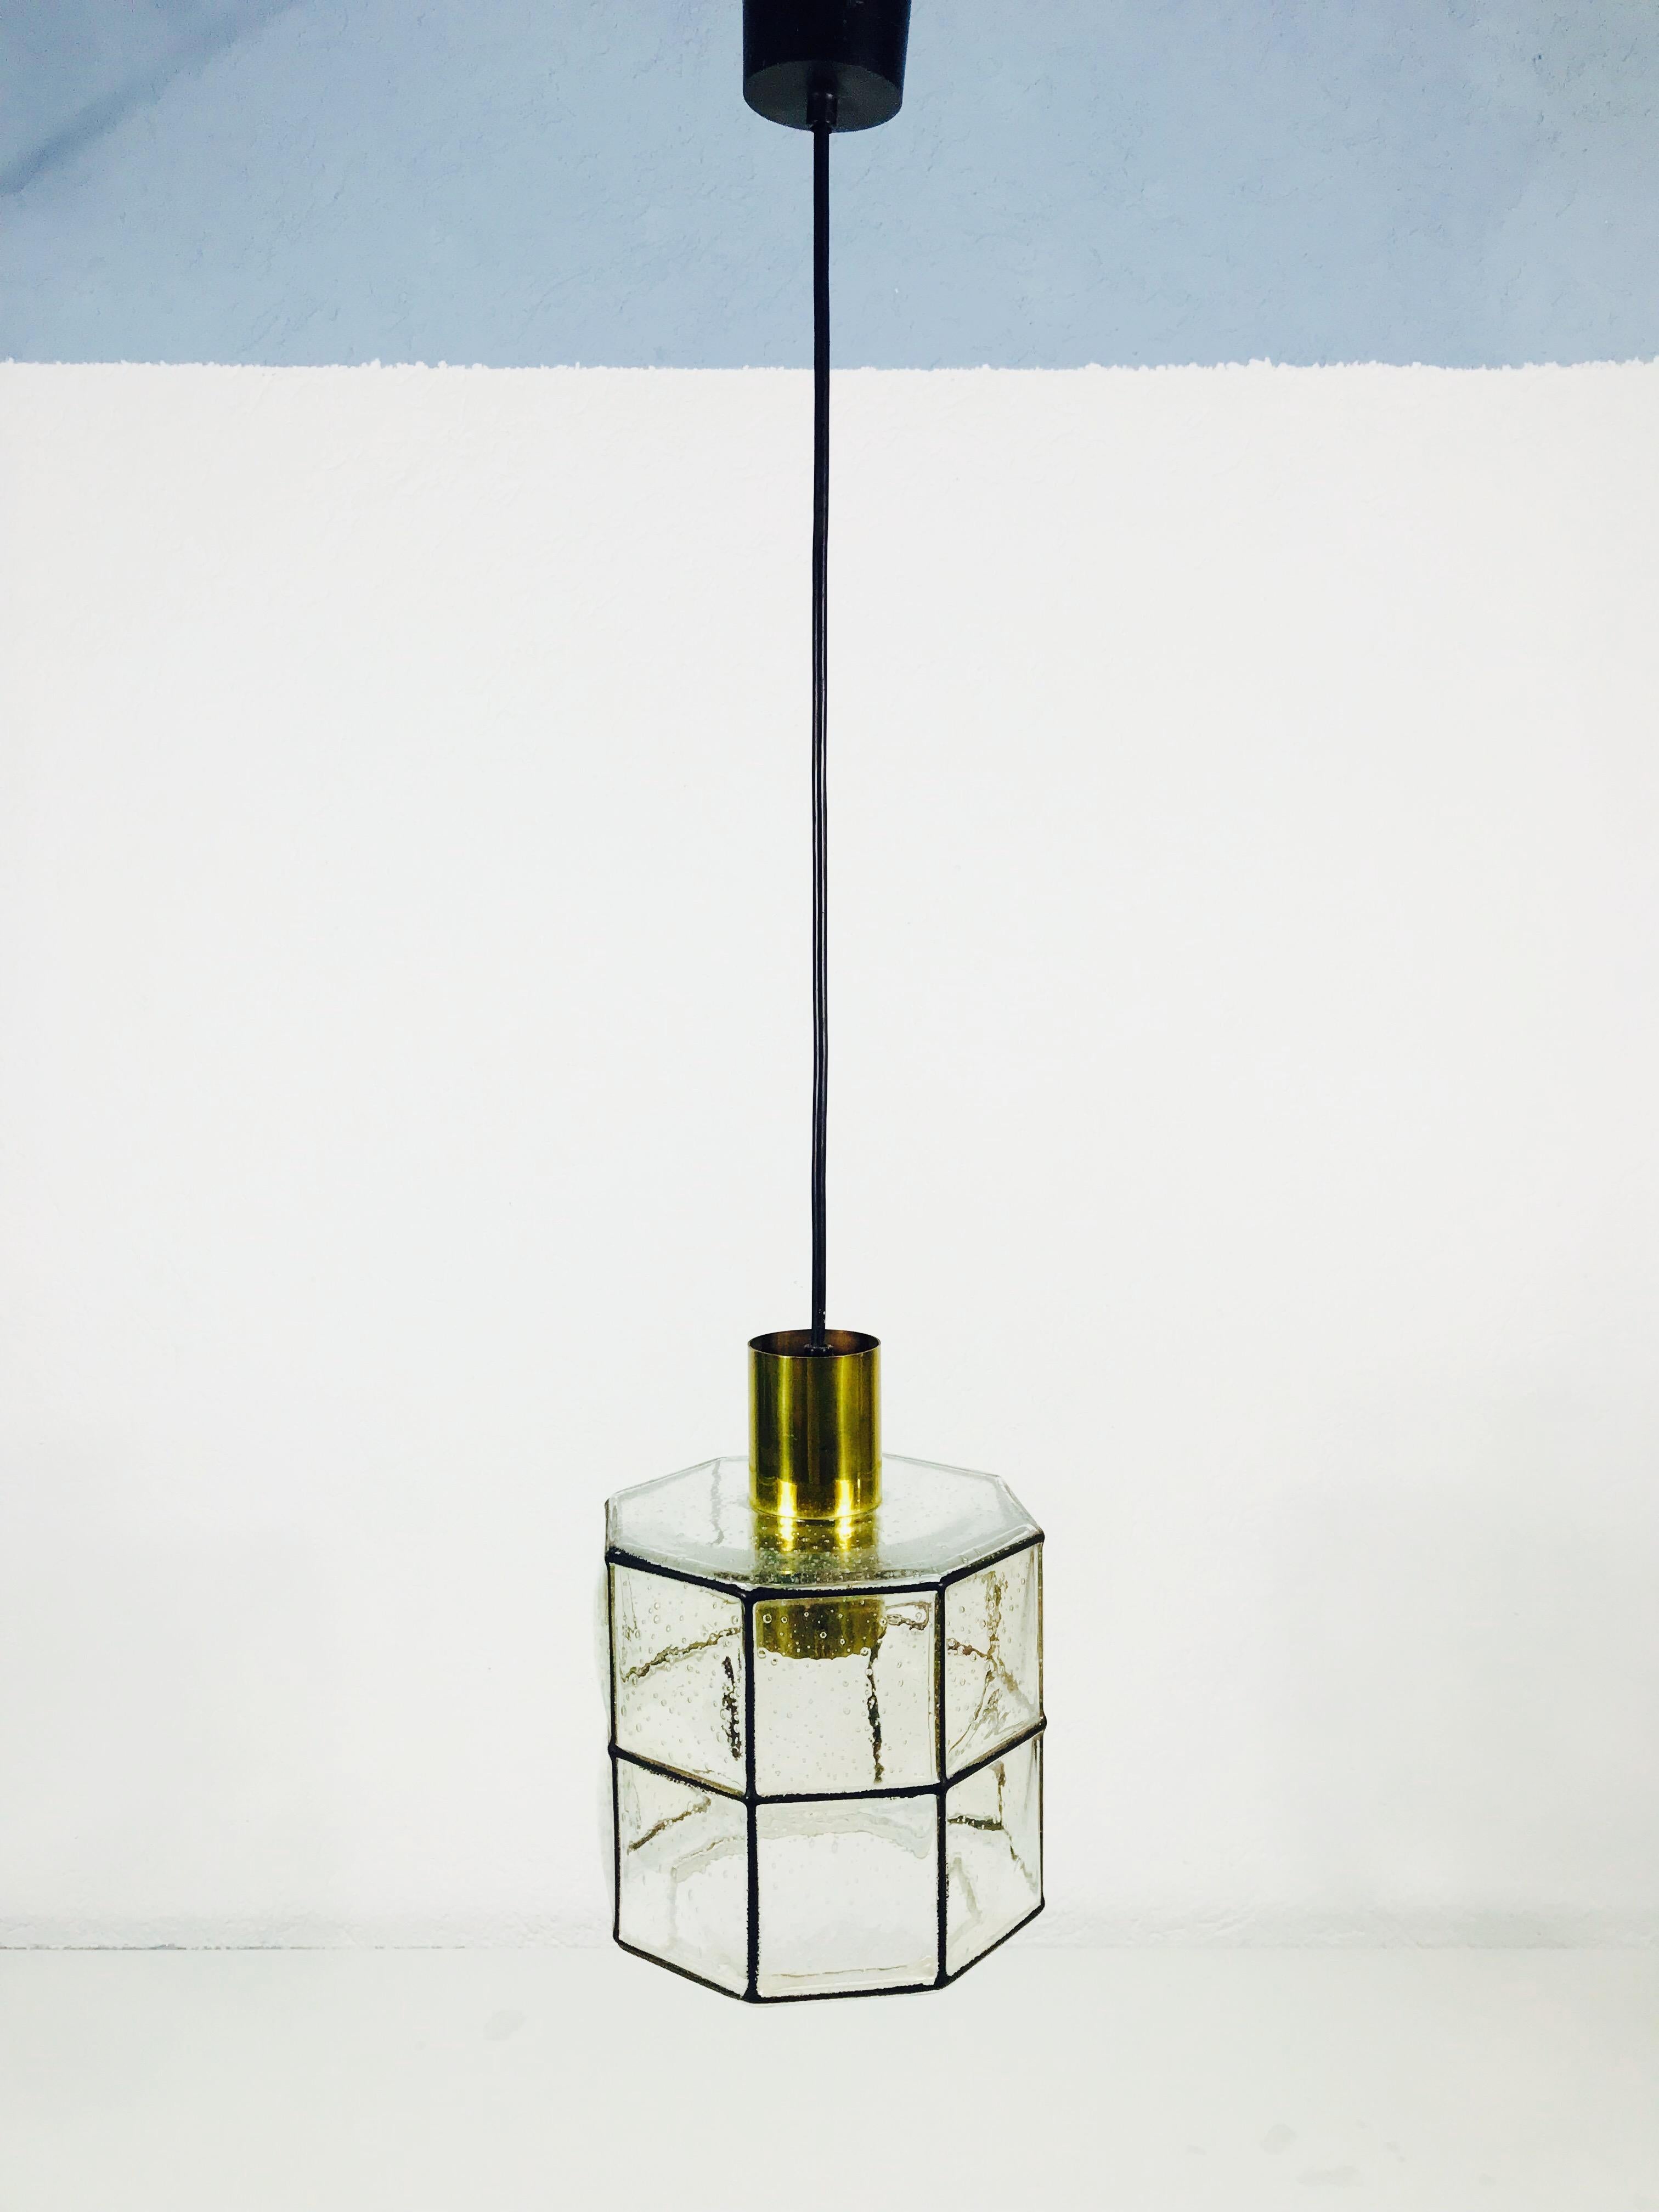 German Midcentury Iron and Bubble Glass Pendant Lamp by Glashütte Limburg, 1960s For Sale